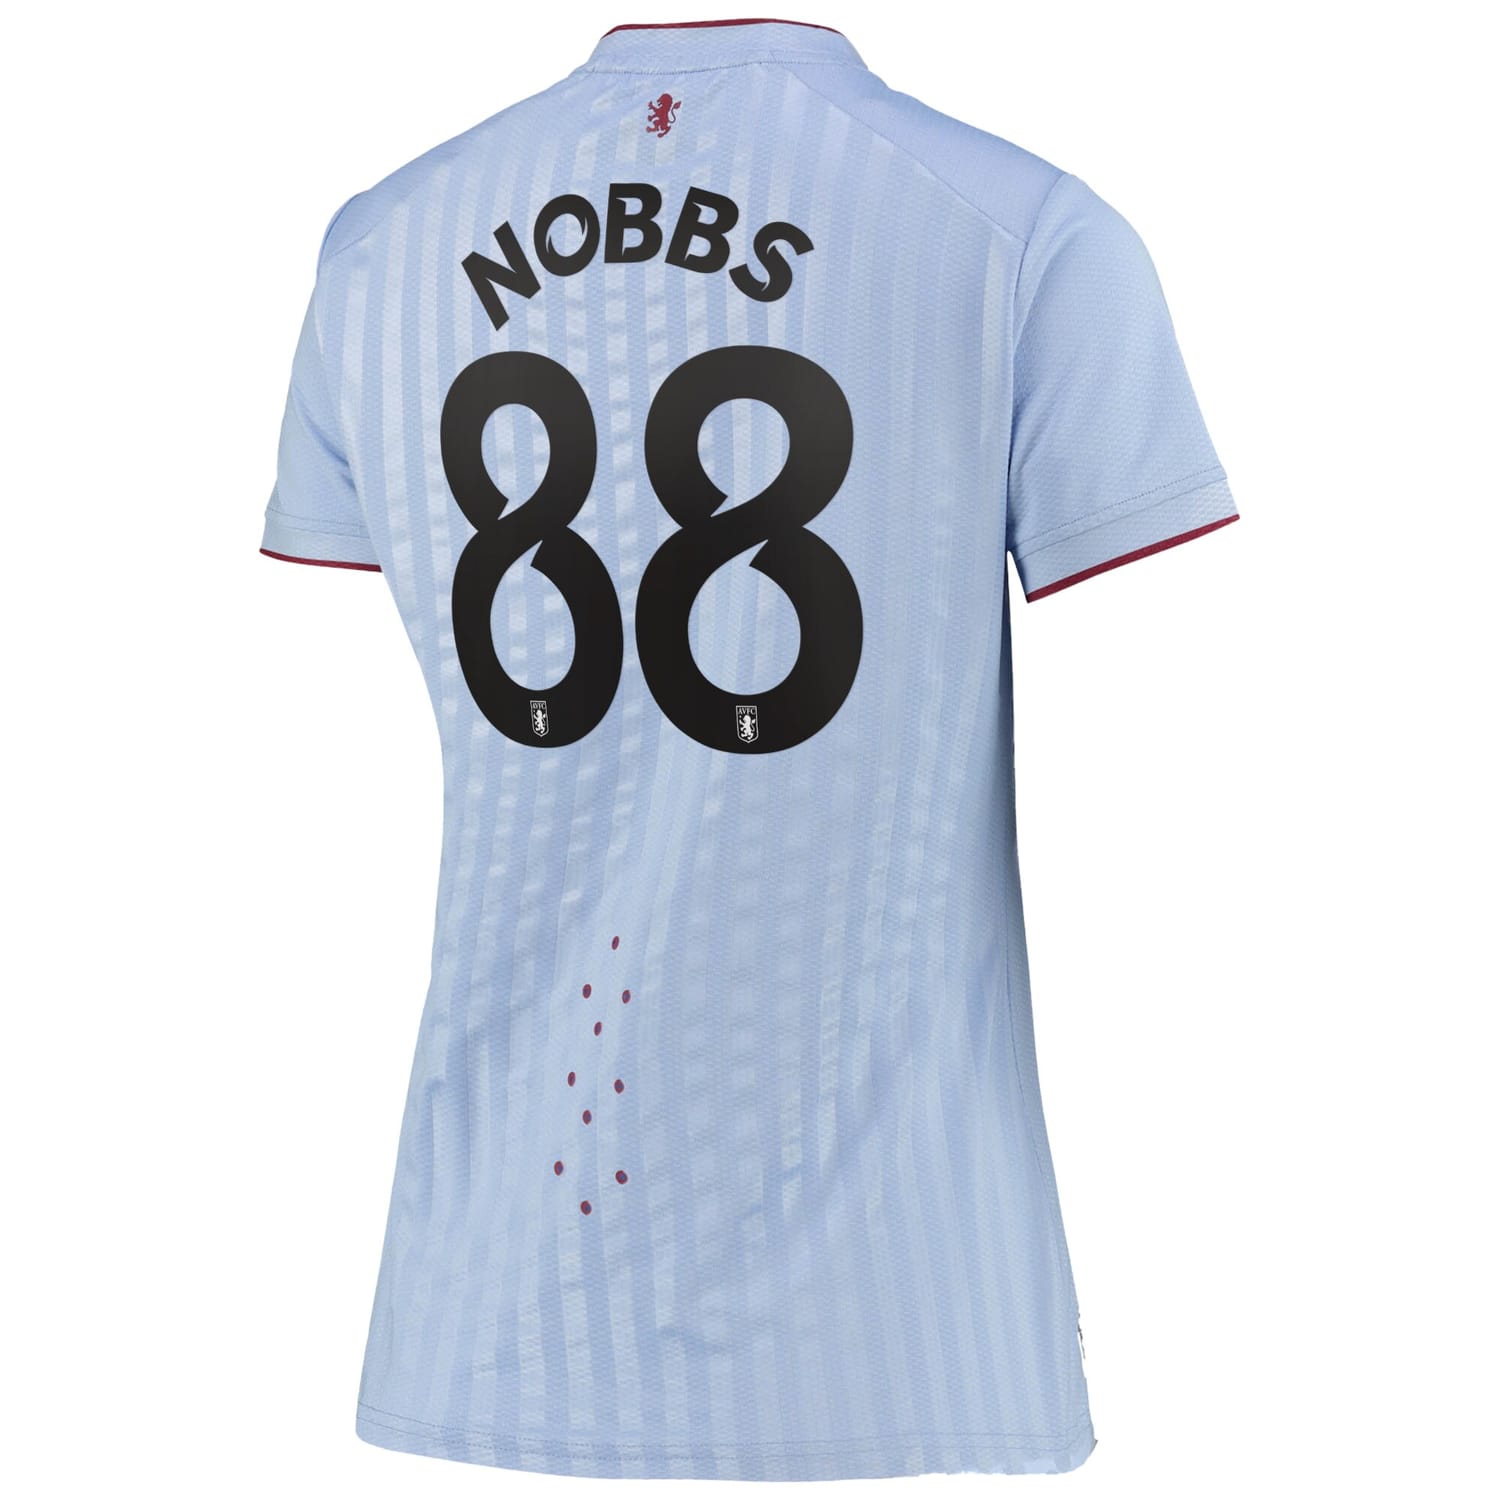 Premier League Aston Villa Away Cup Pro Jersey Shirt 2022-23 player Jordan Nobbs 88 printing for Women